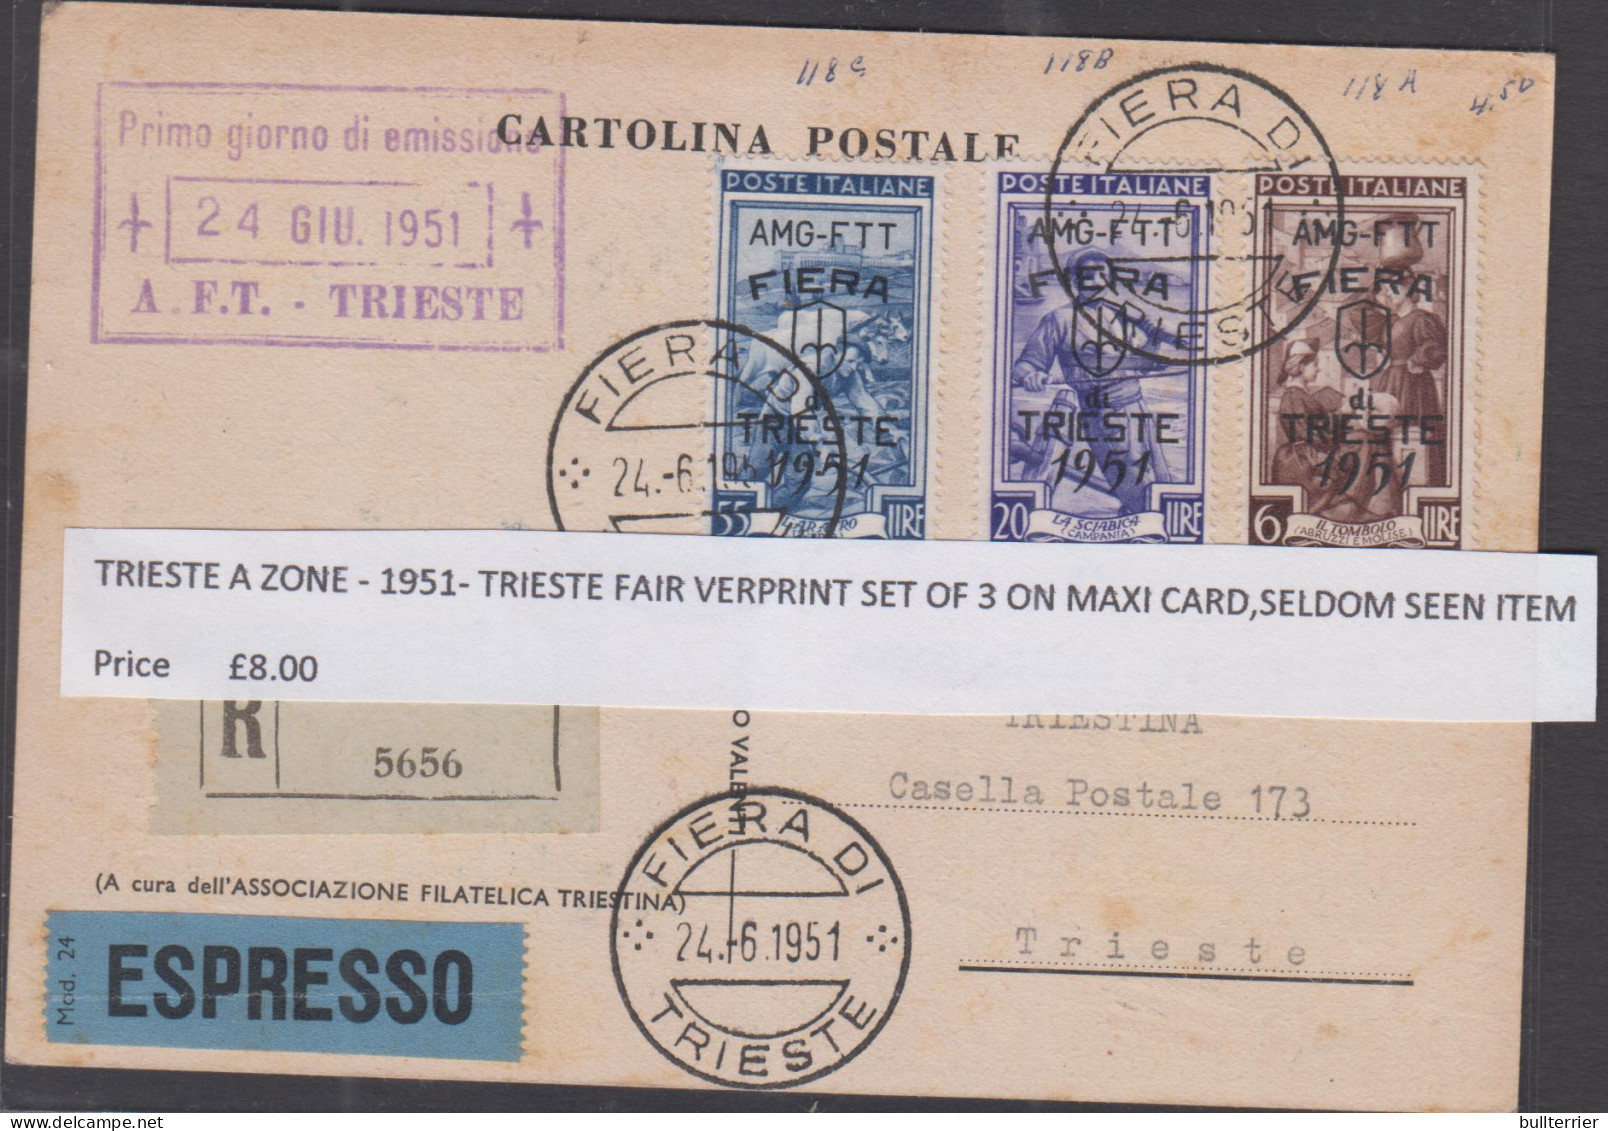 TRIESTE A ZONE - 1951 TRIESTE FAIR OVERPRINT SET OF 3 ON MAXI CARD  - Express Mail